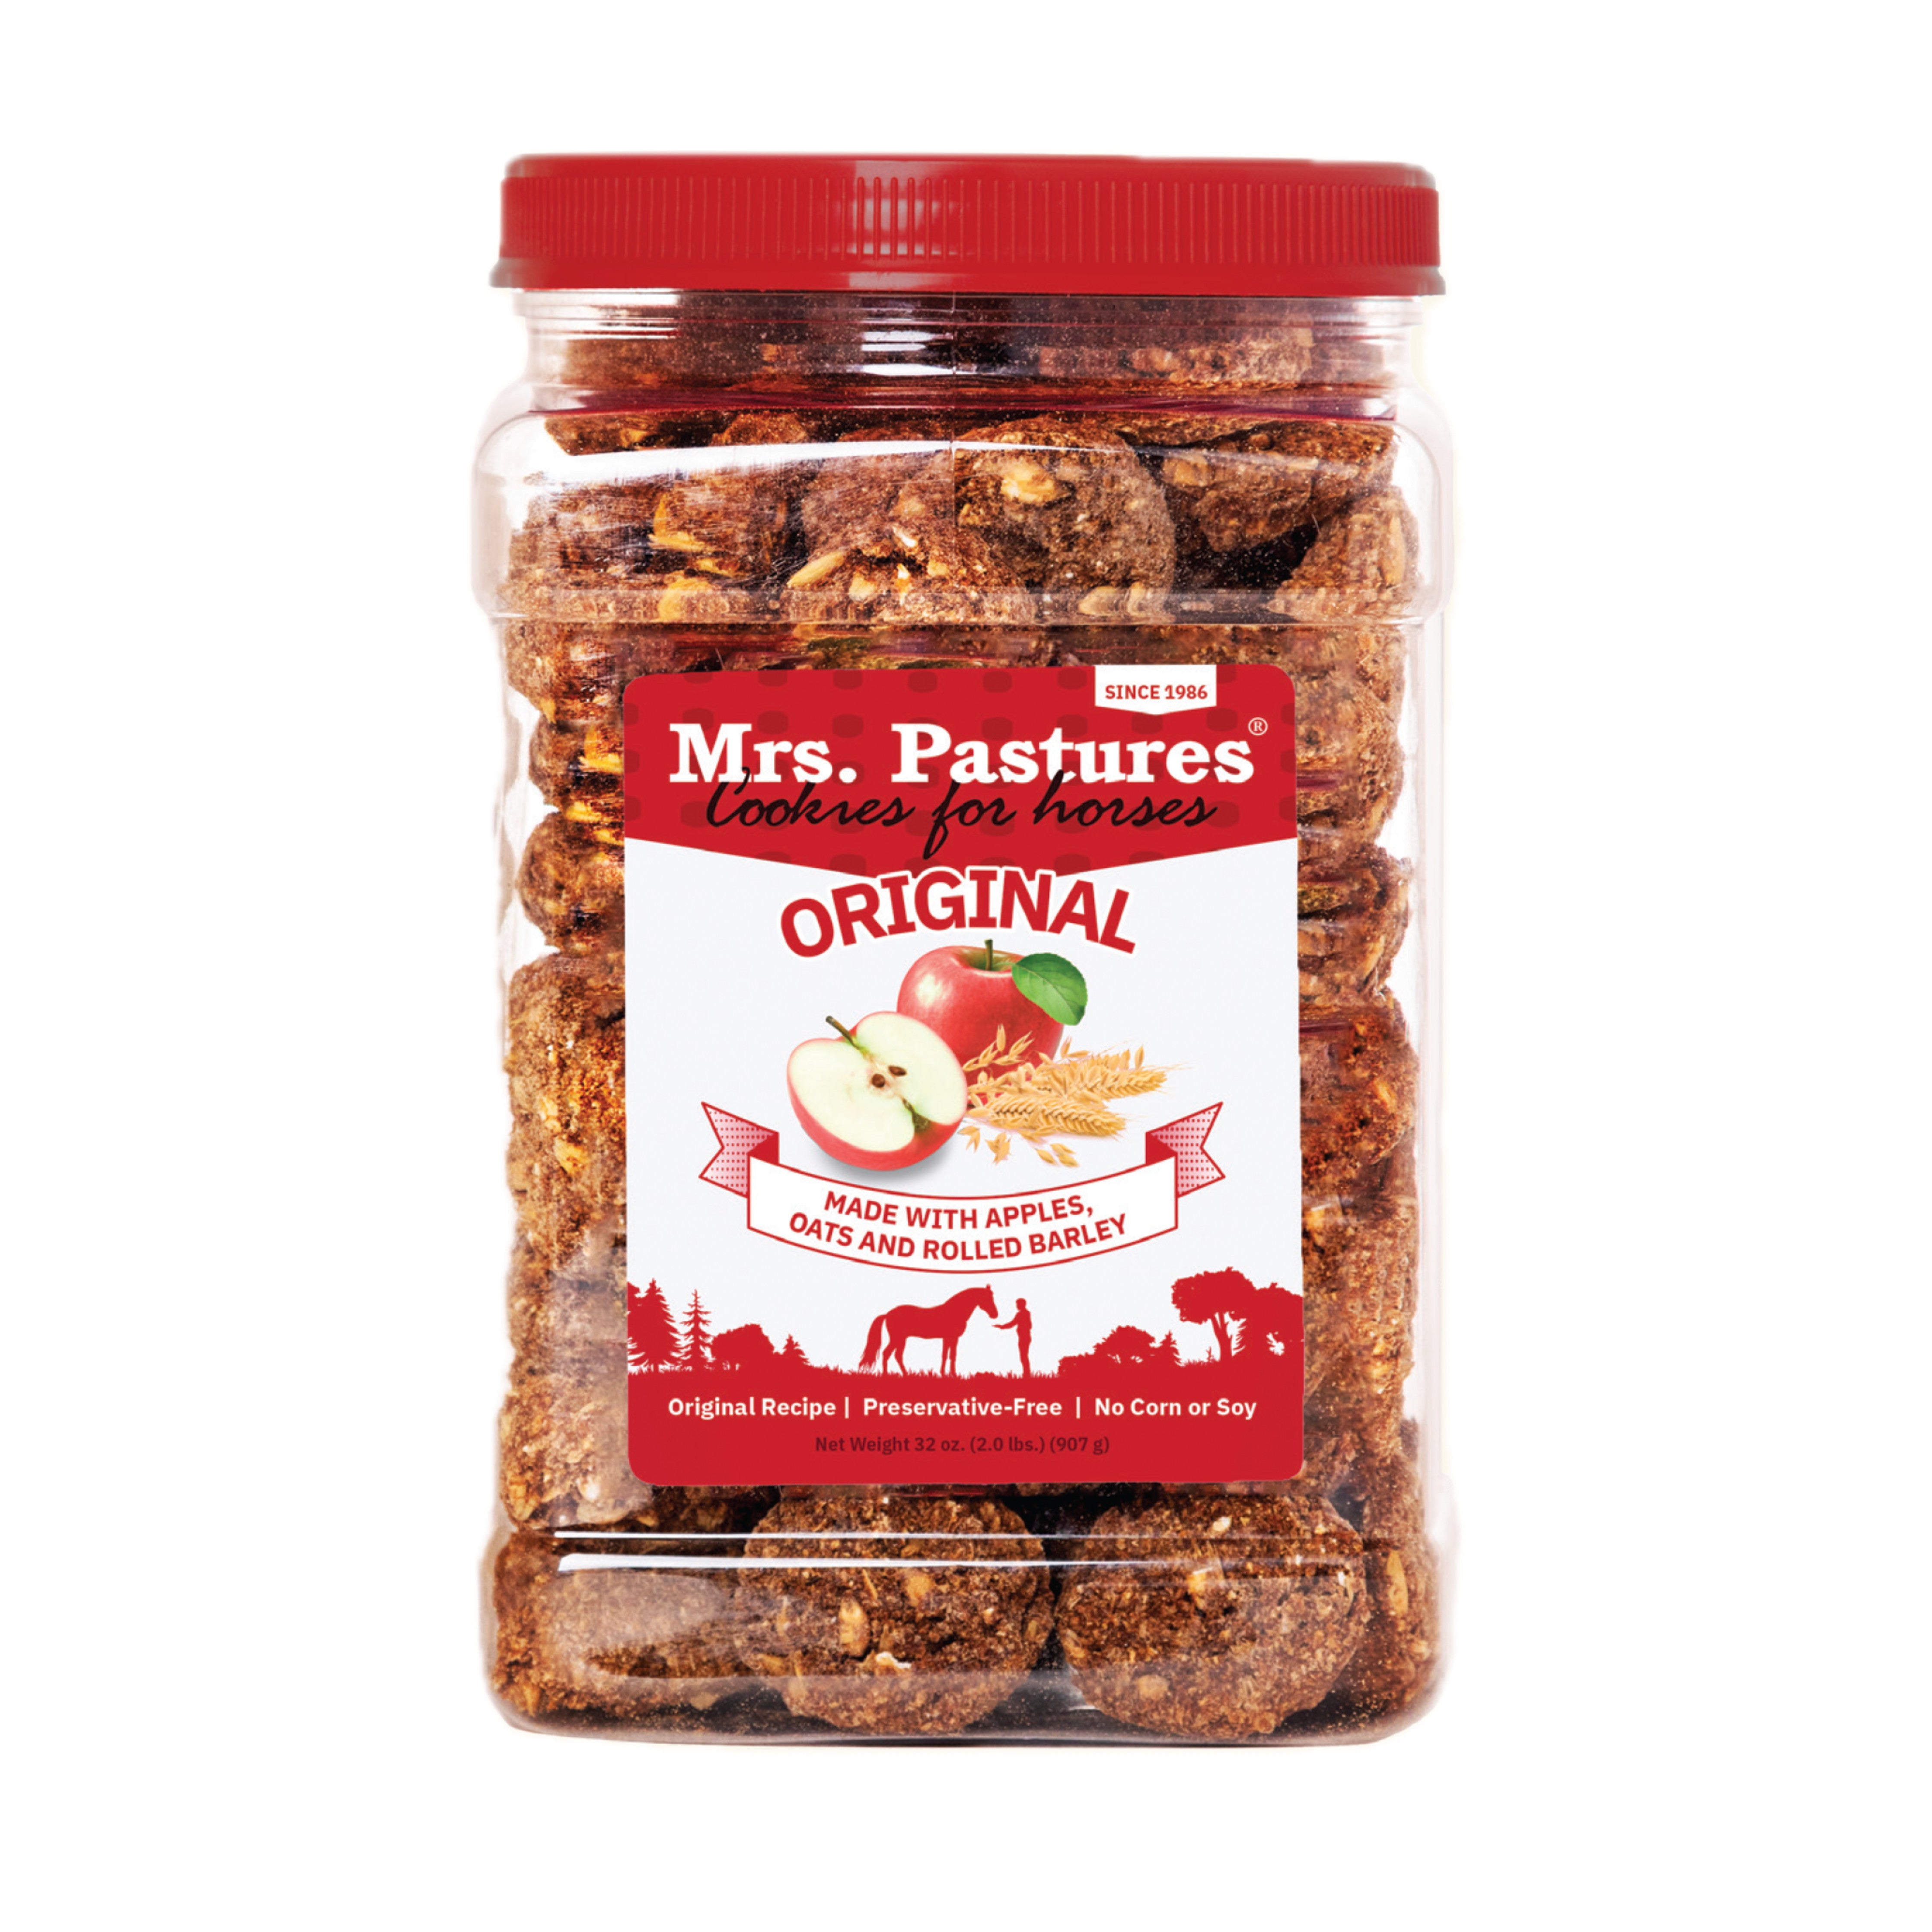 Mrs Pastures Original Cookie 2 lb jar